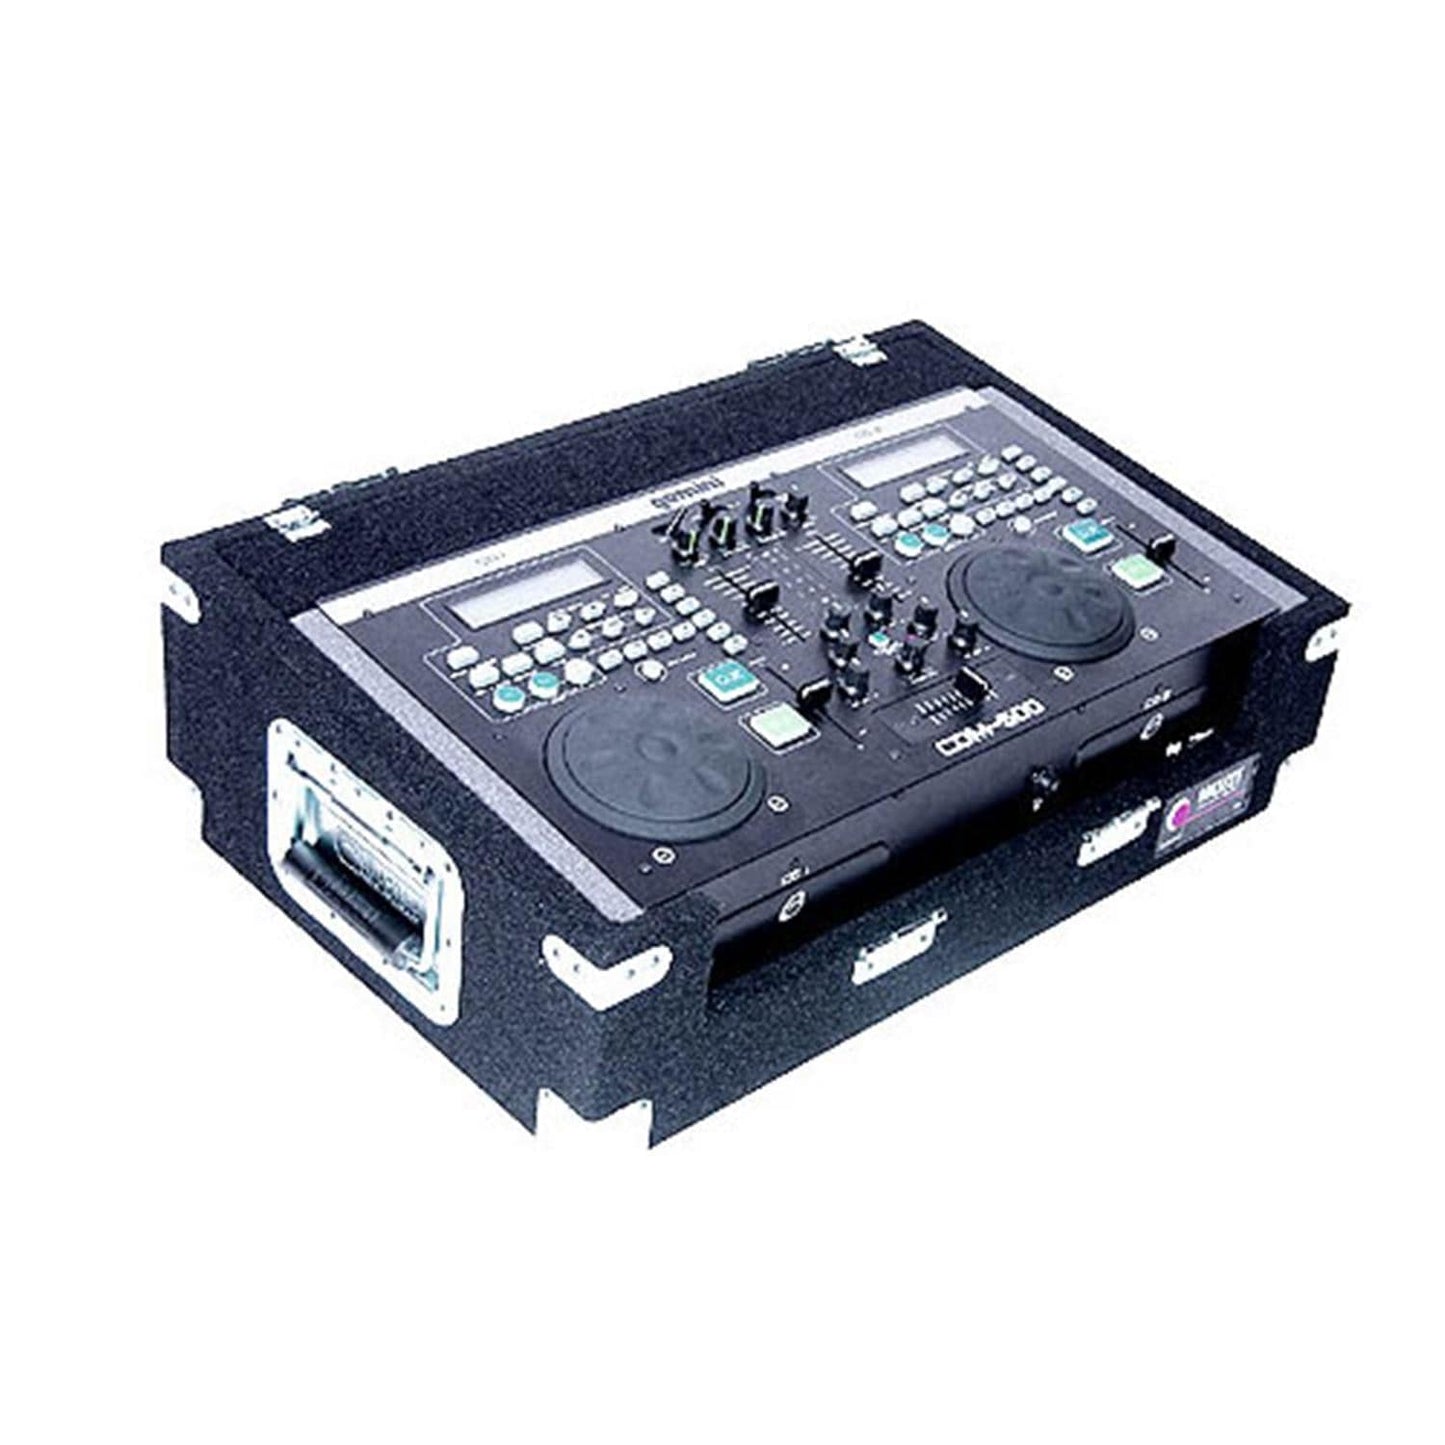 Odyssey CD Mix Case Gemini CDM500 CDM3600 & More - ProSound and Stage Lighting